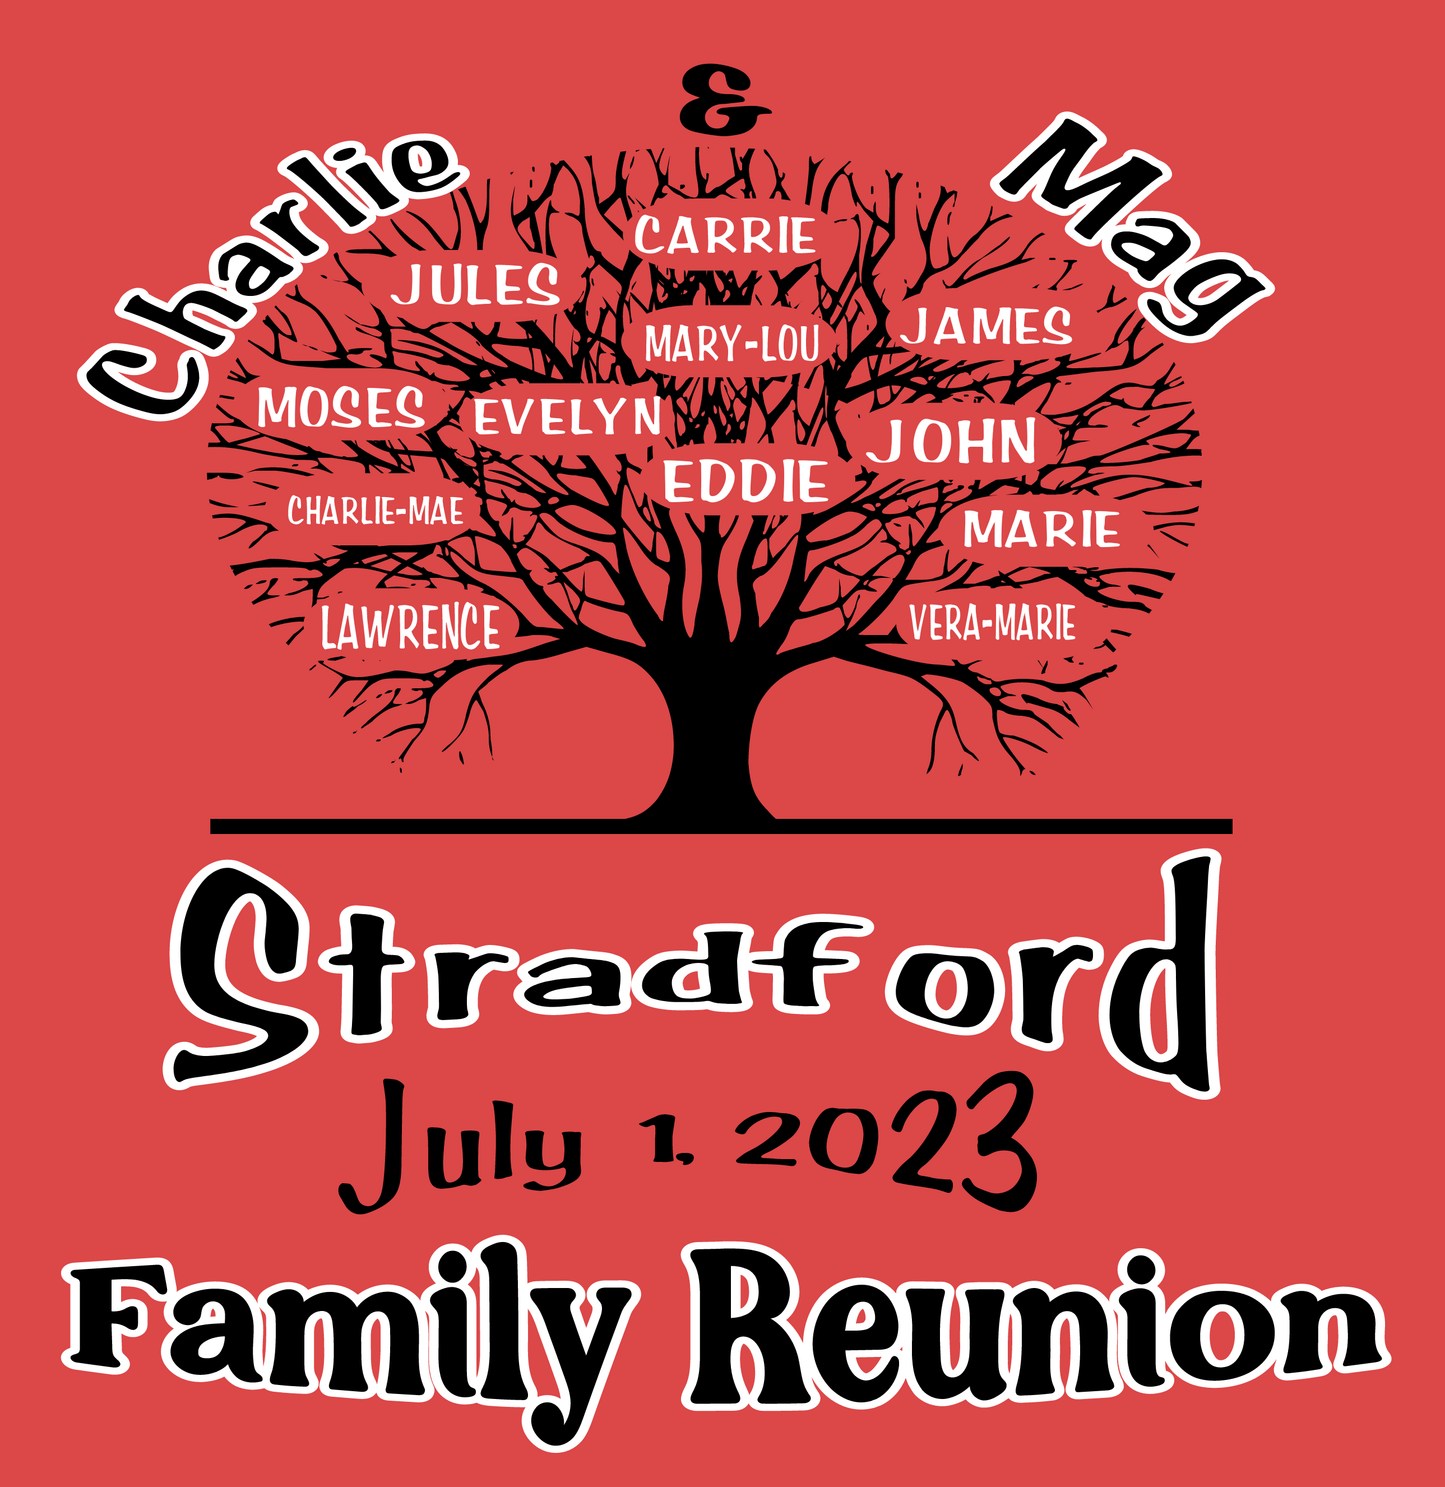 Stradford Family Reunion Tee Children's